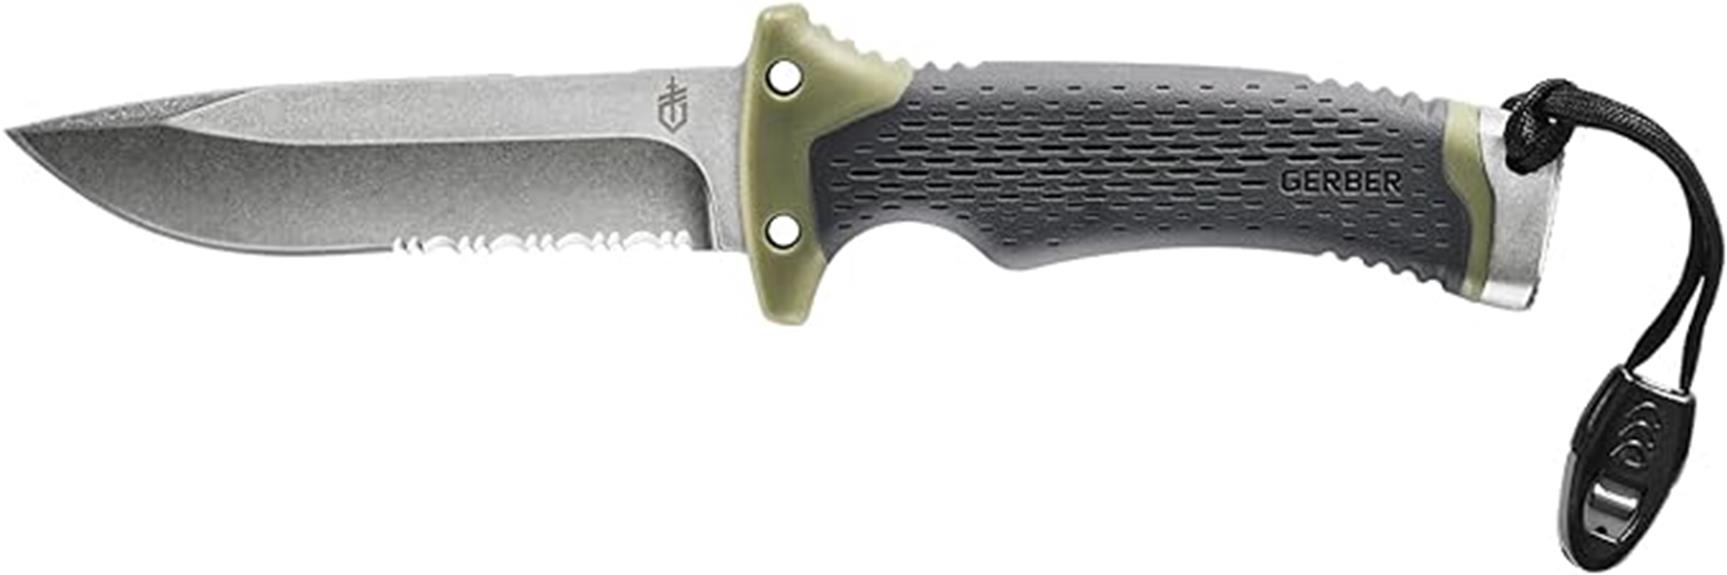 durable versatile high quality blade